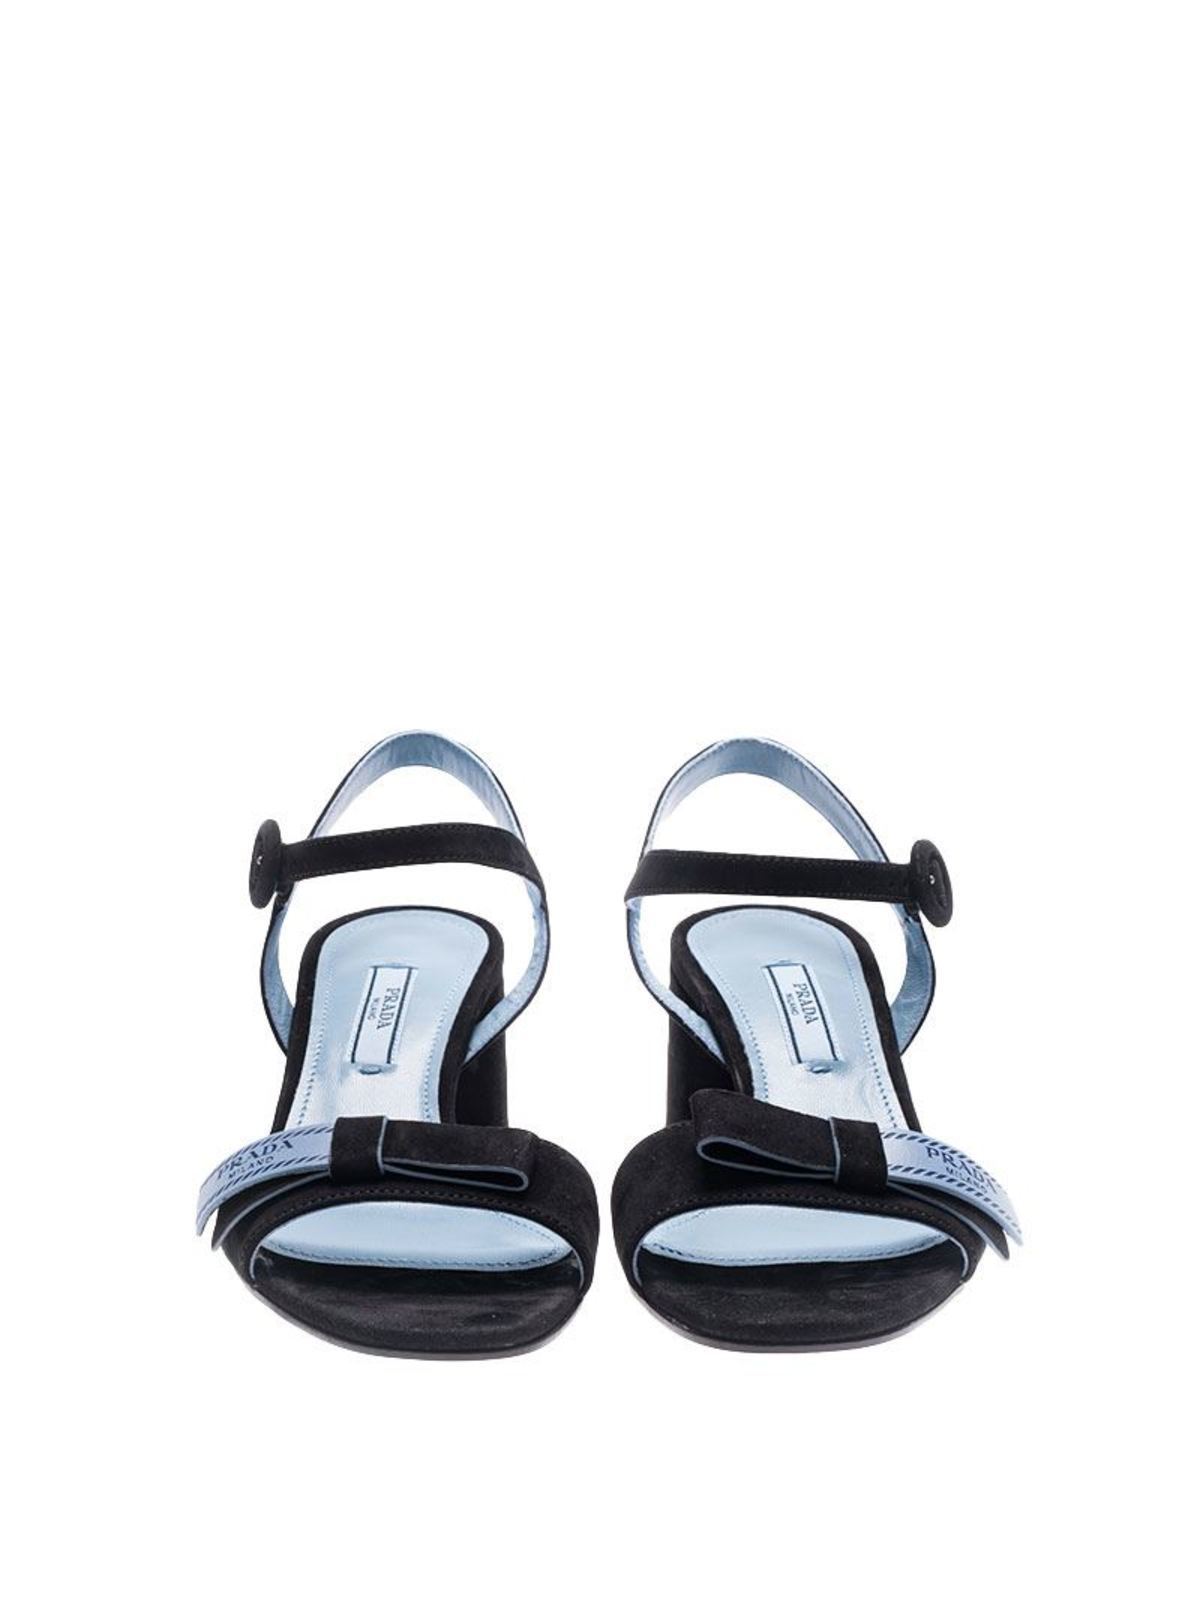 Prada - Bow detailed suede sandals 